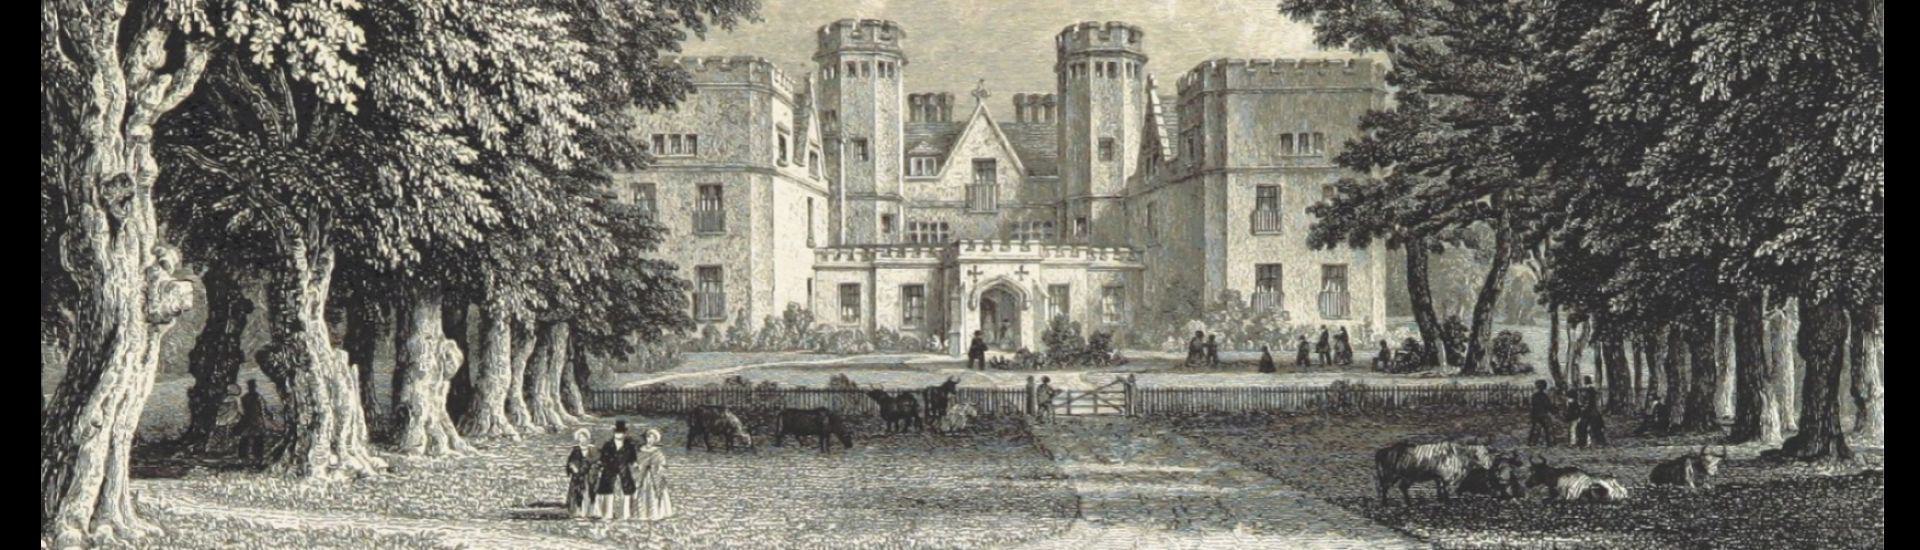 Historic drawing of Southampton